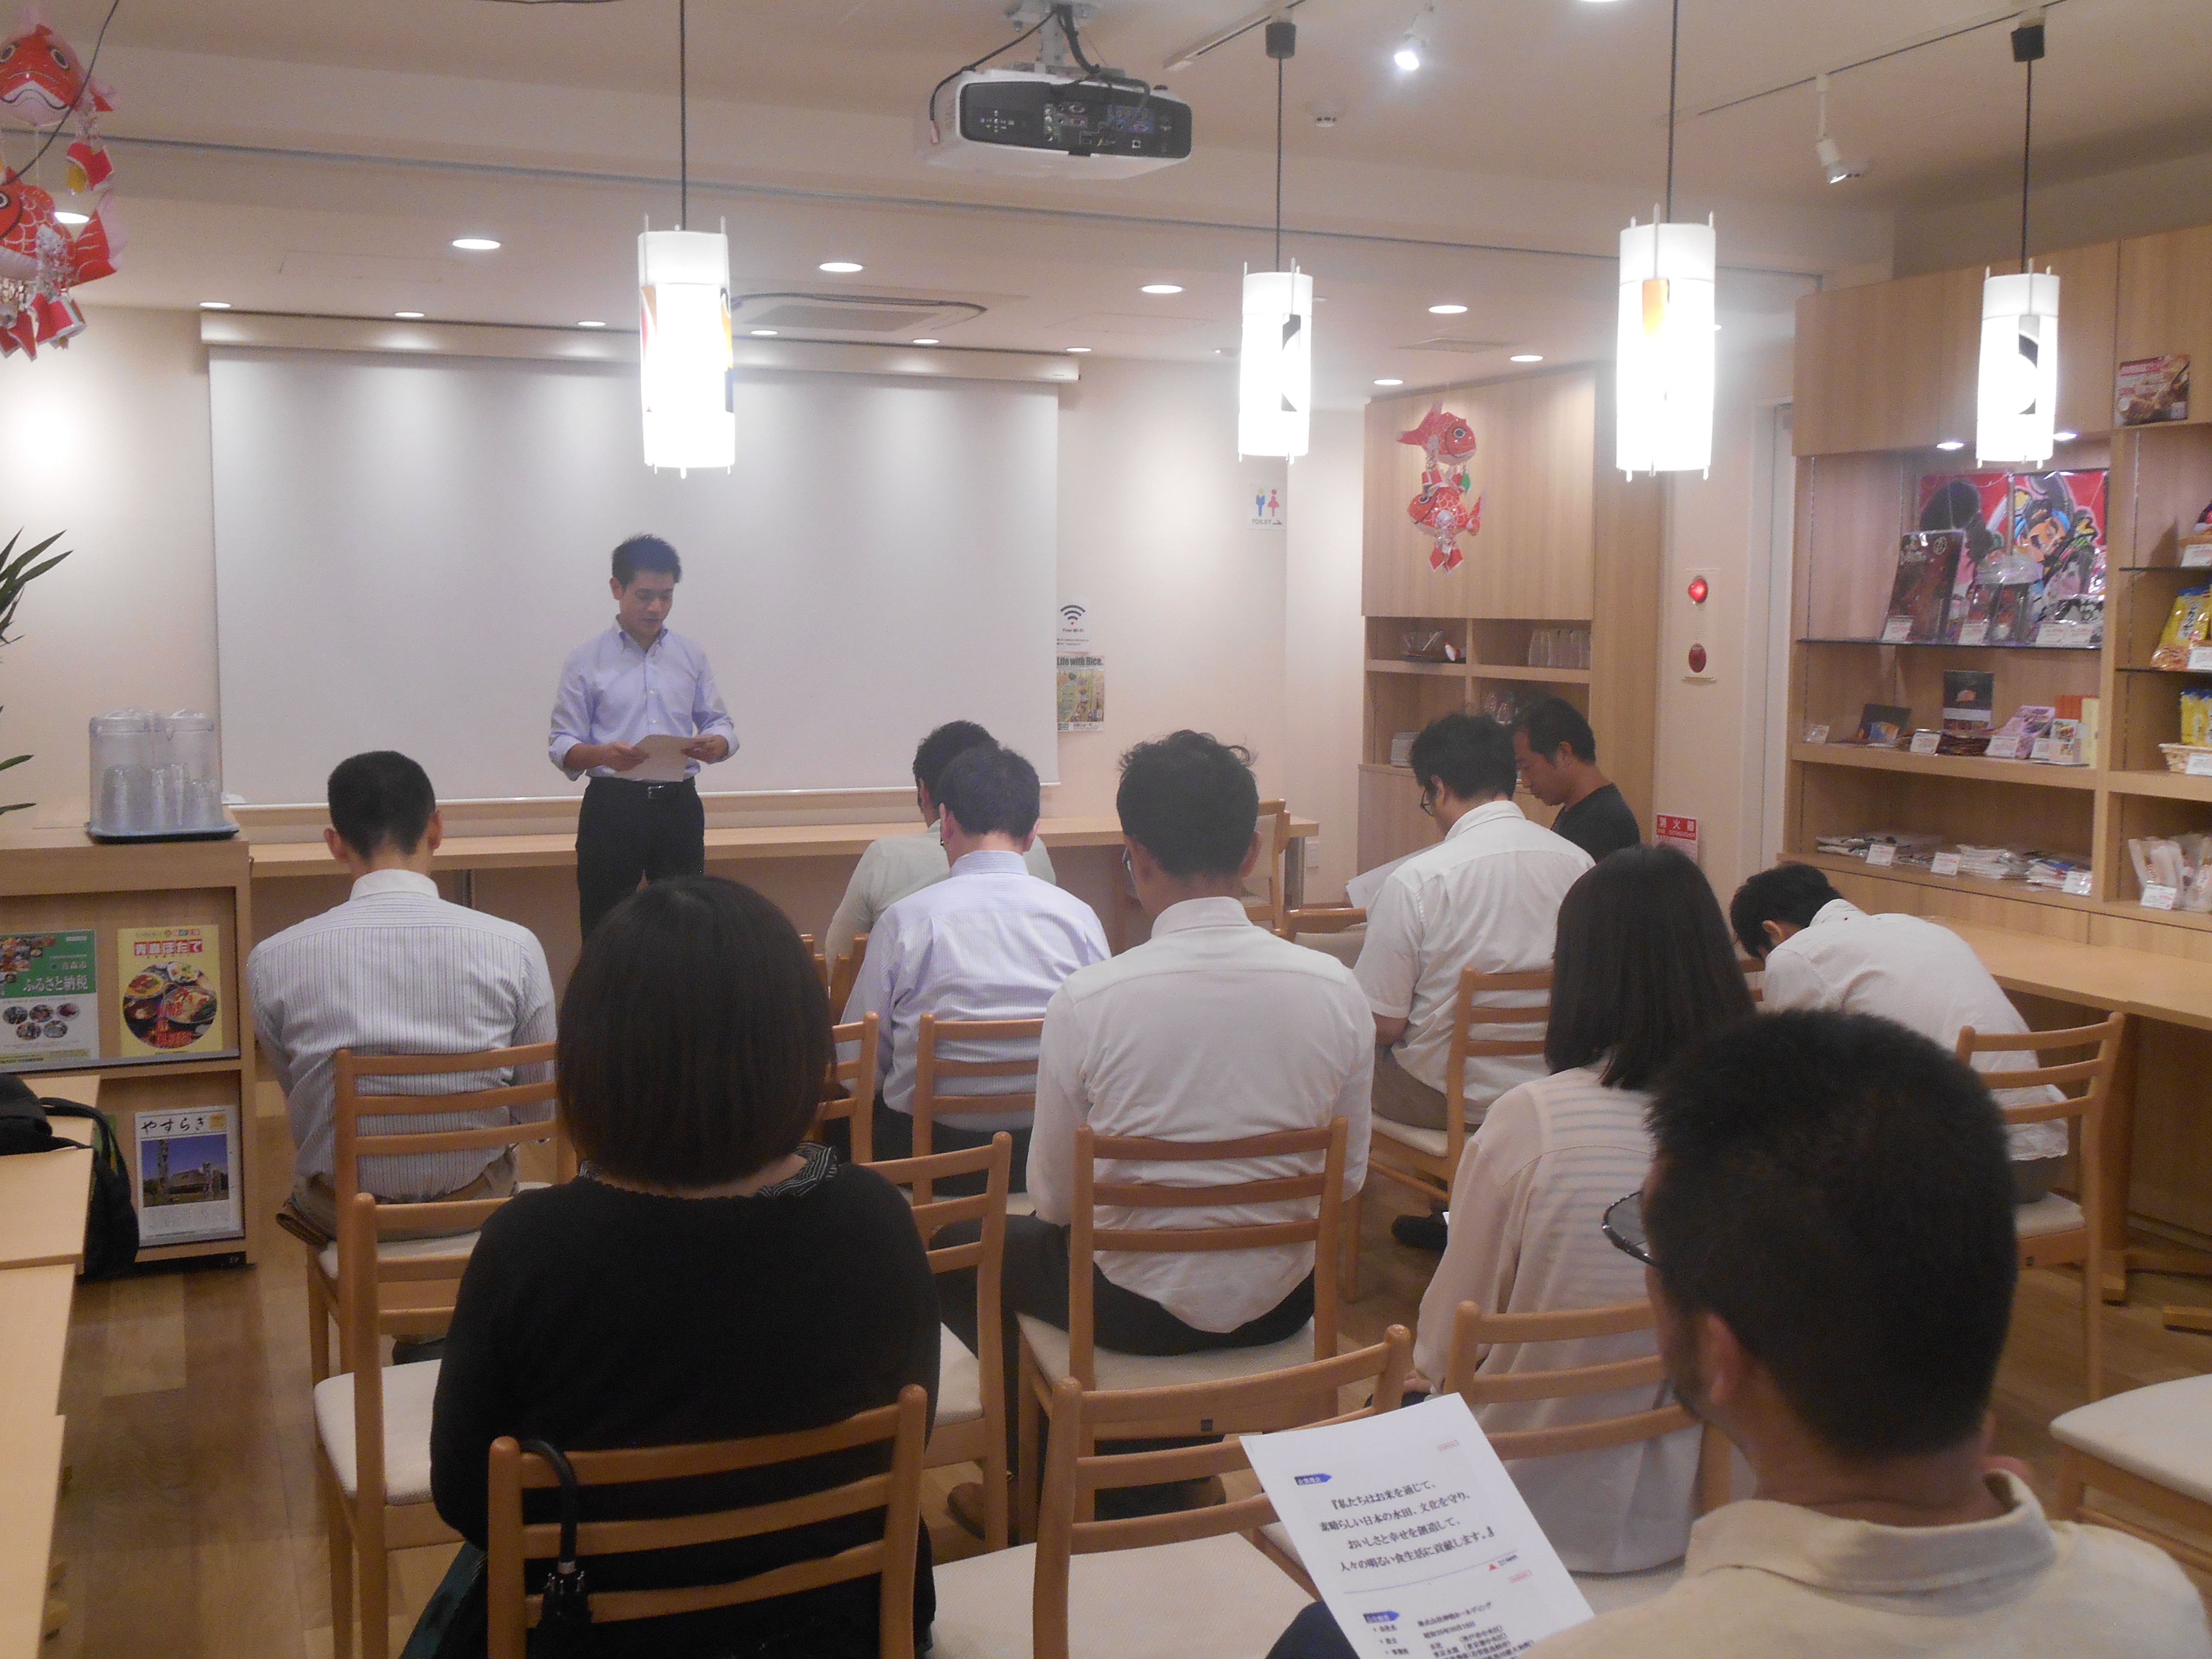 DSCN1891 - AoMoLink〜赤坂〜の第2回勉強会&交流会開催します。